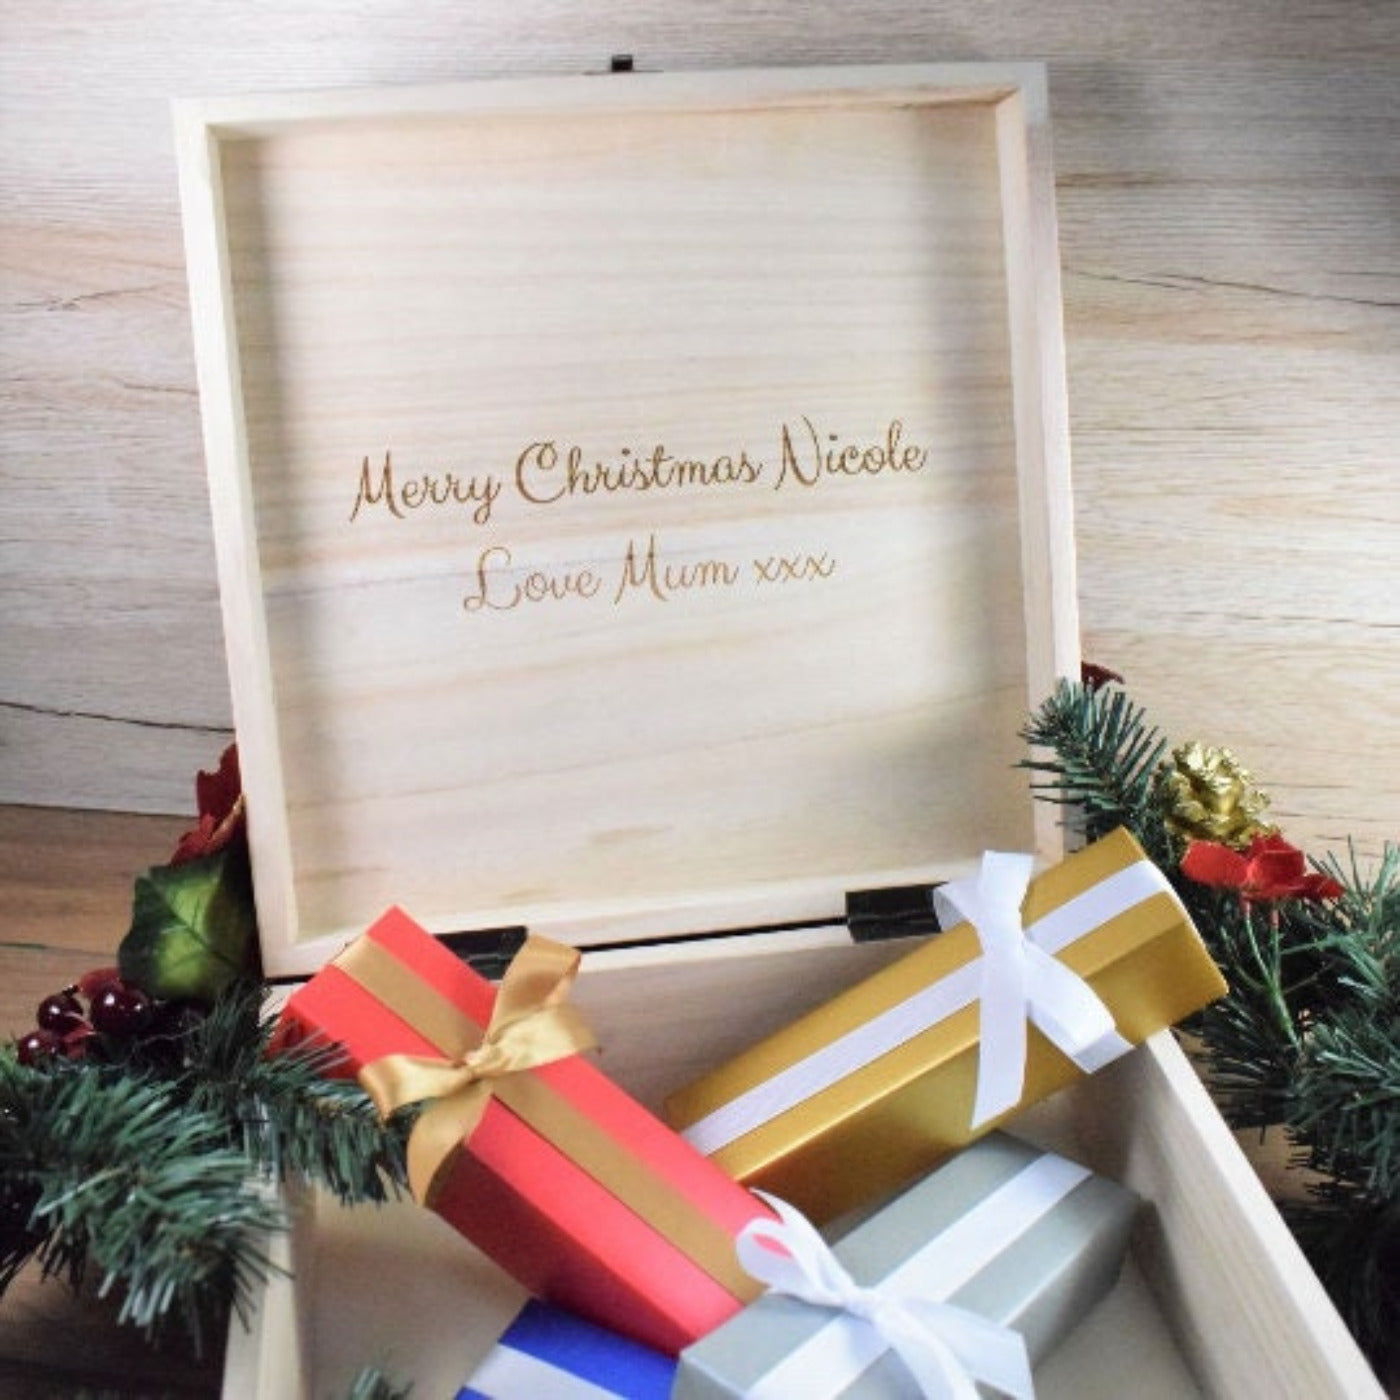 Christmas Eve Box - Santa & Snowman Design